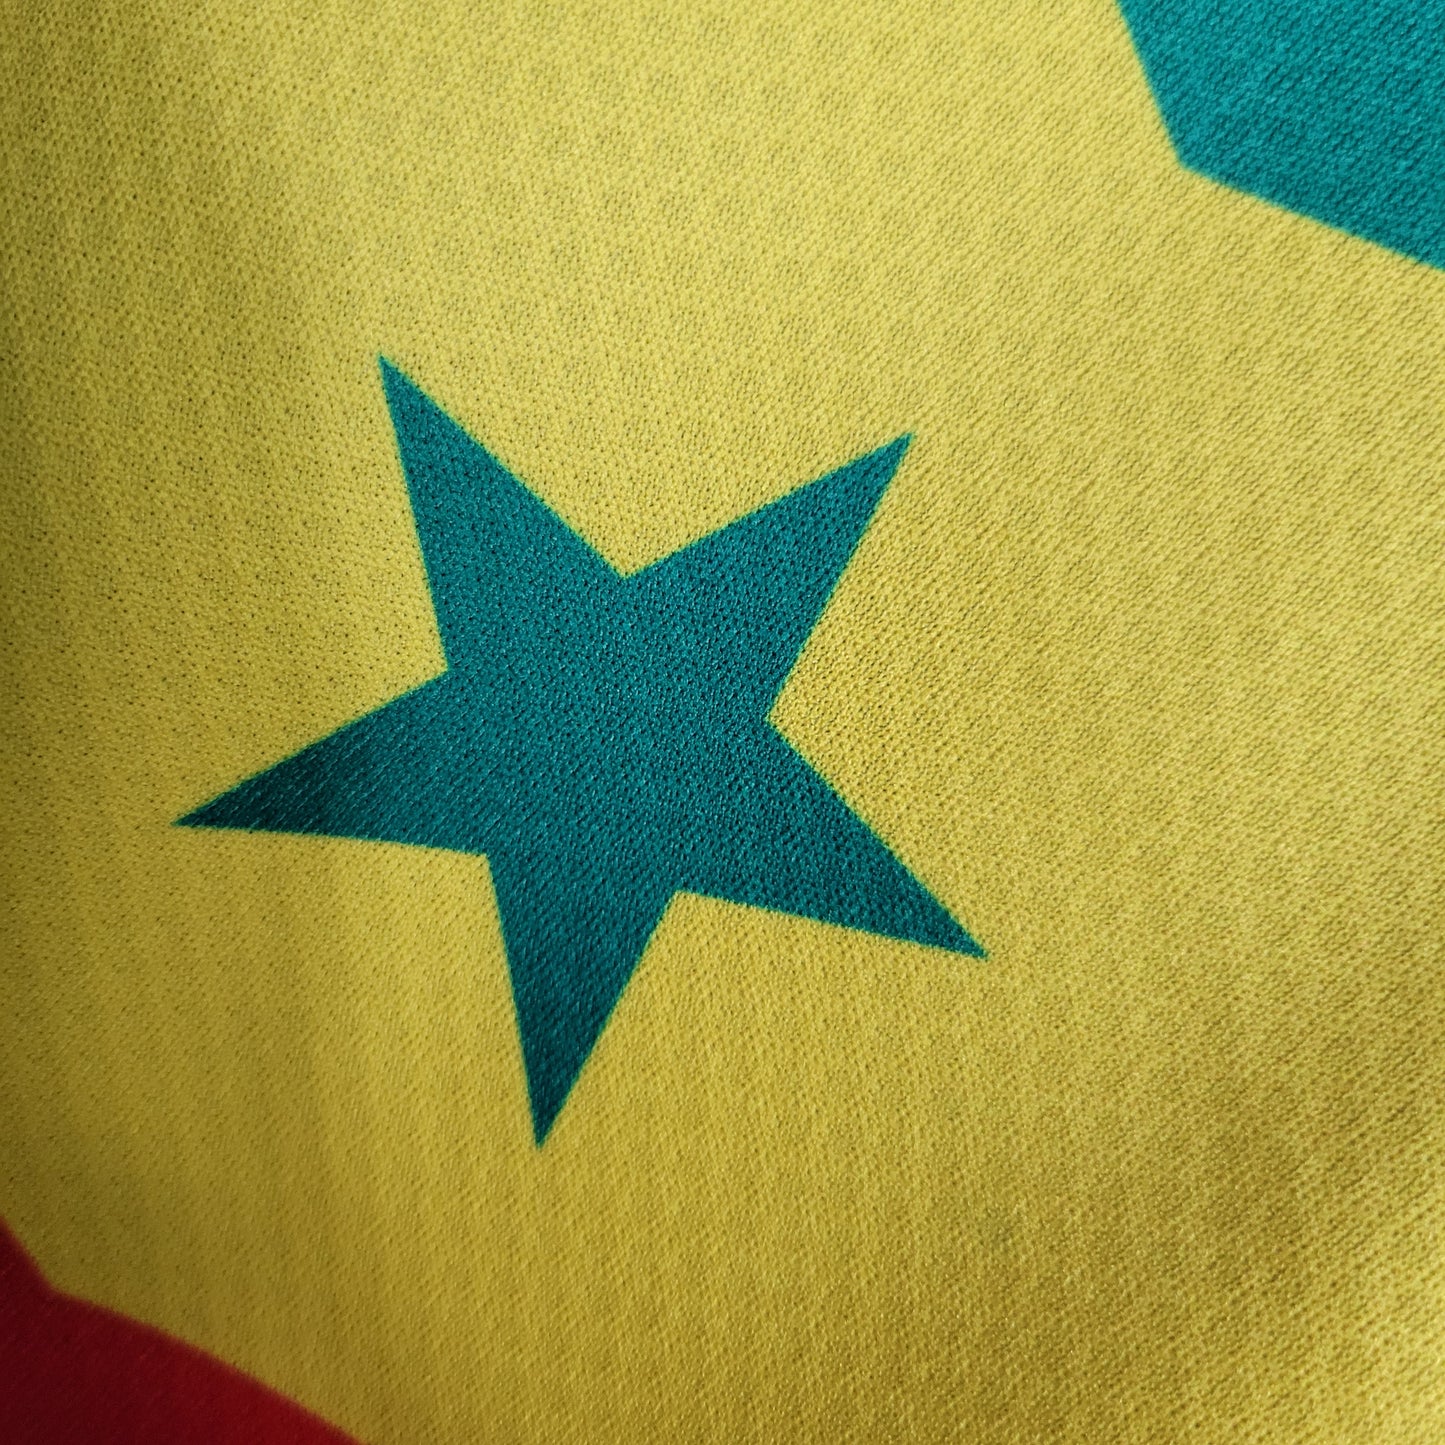 Camisa Torcedor Senegal Away Copa do Mundo 2022